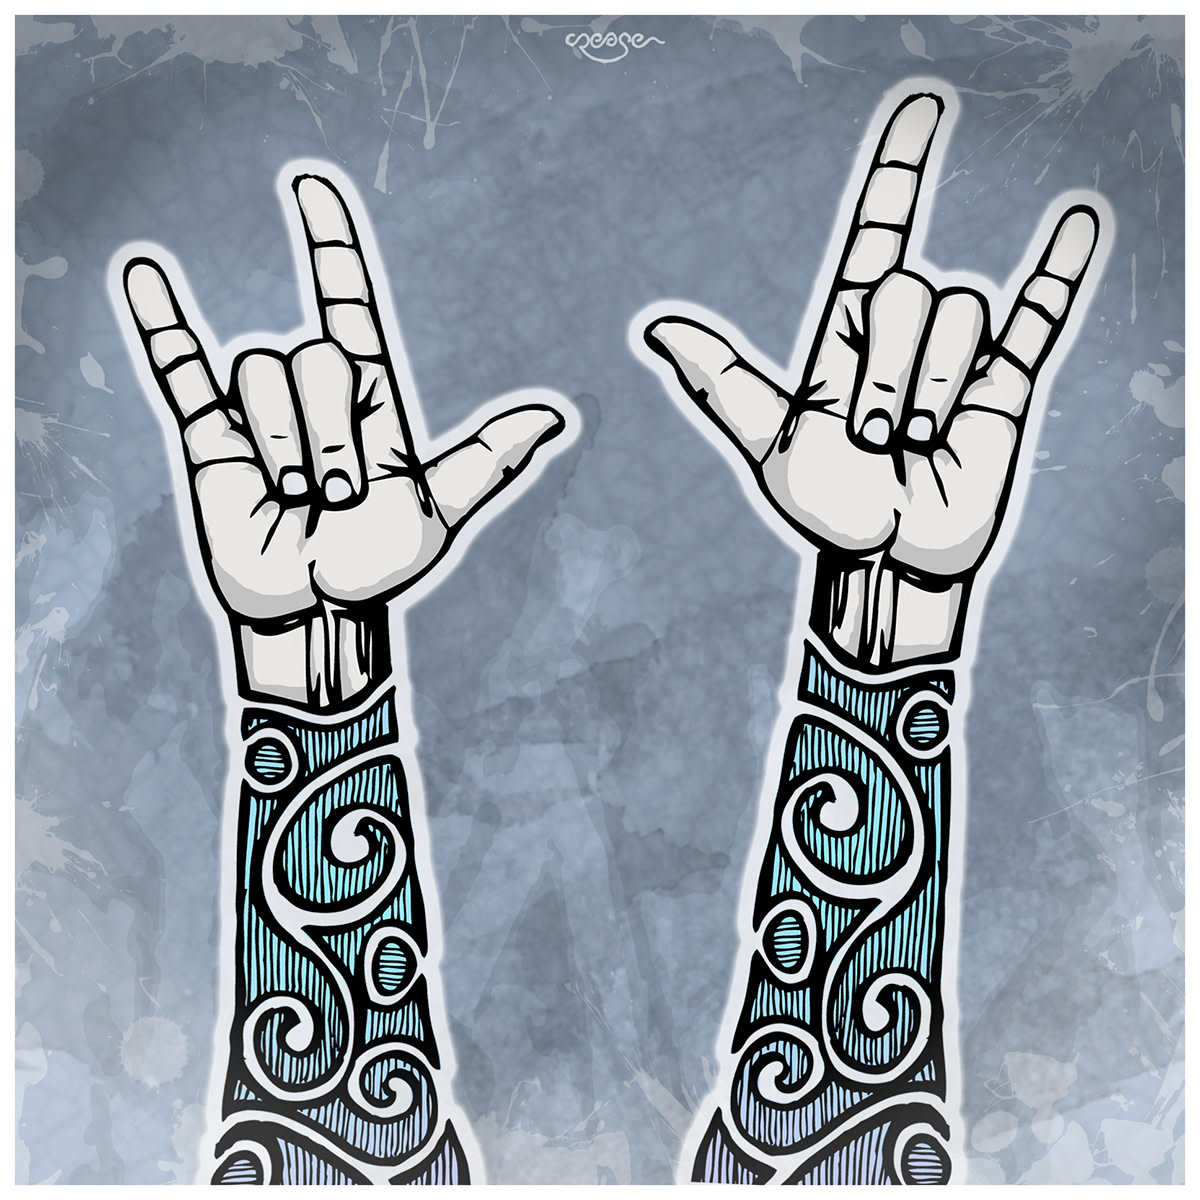 crease sleeve tattoo doodle art print rock hand arm sticker